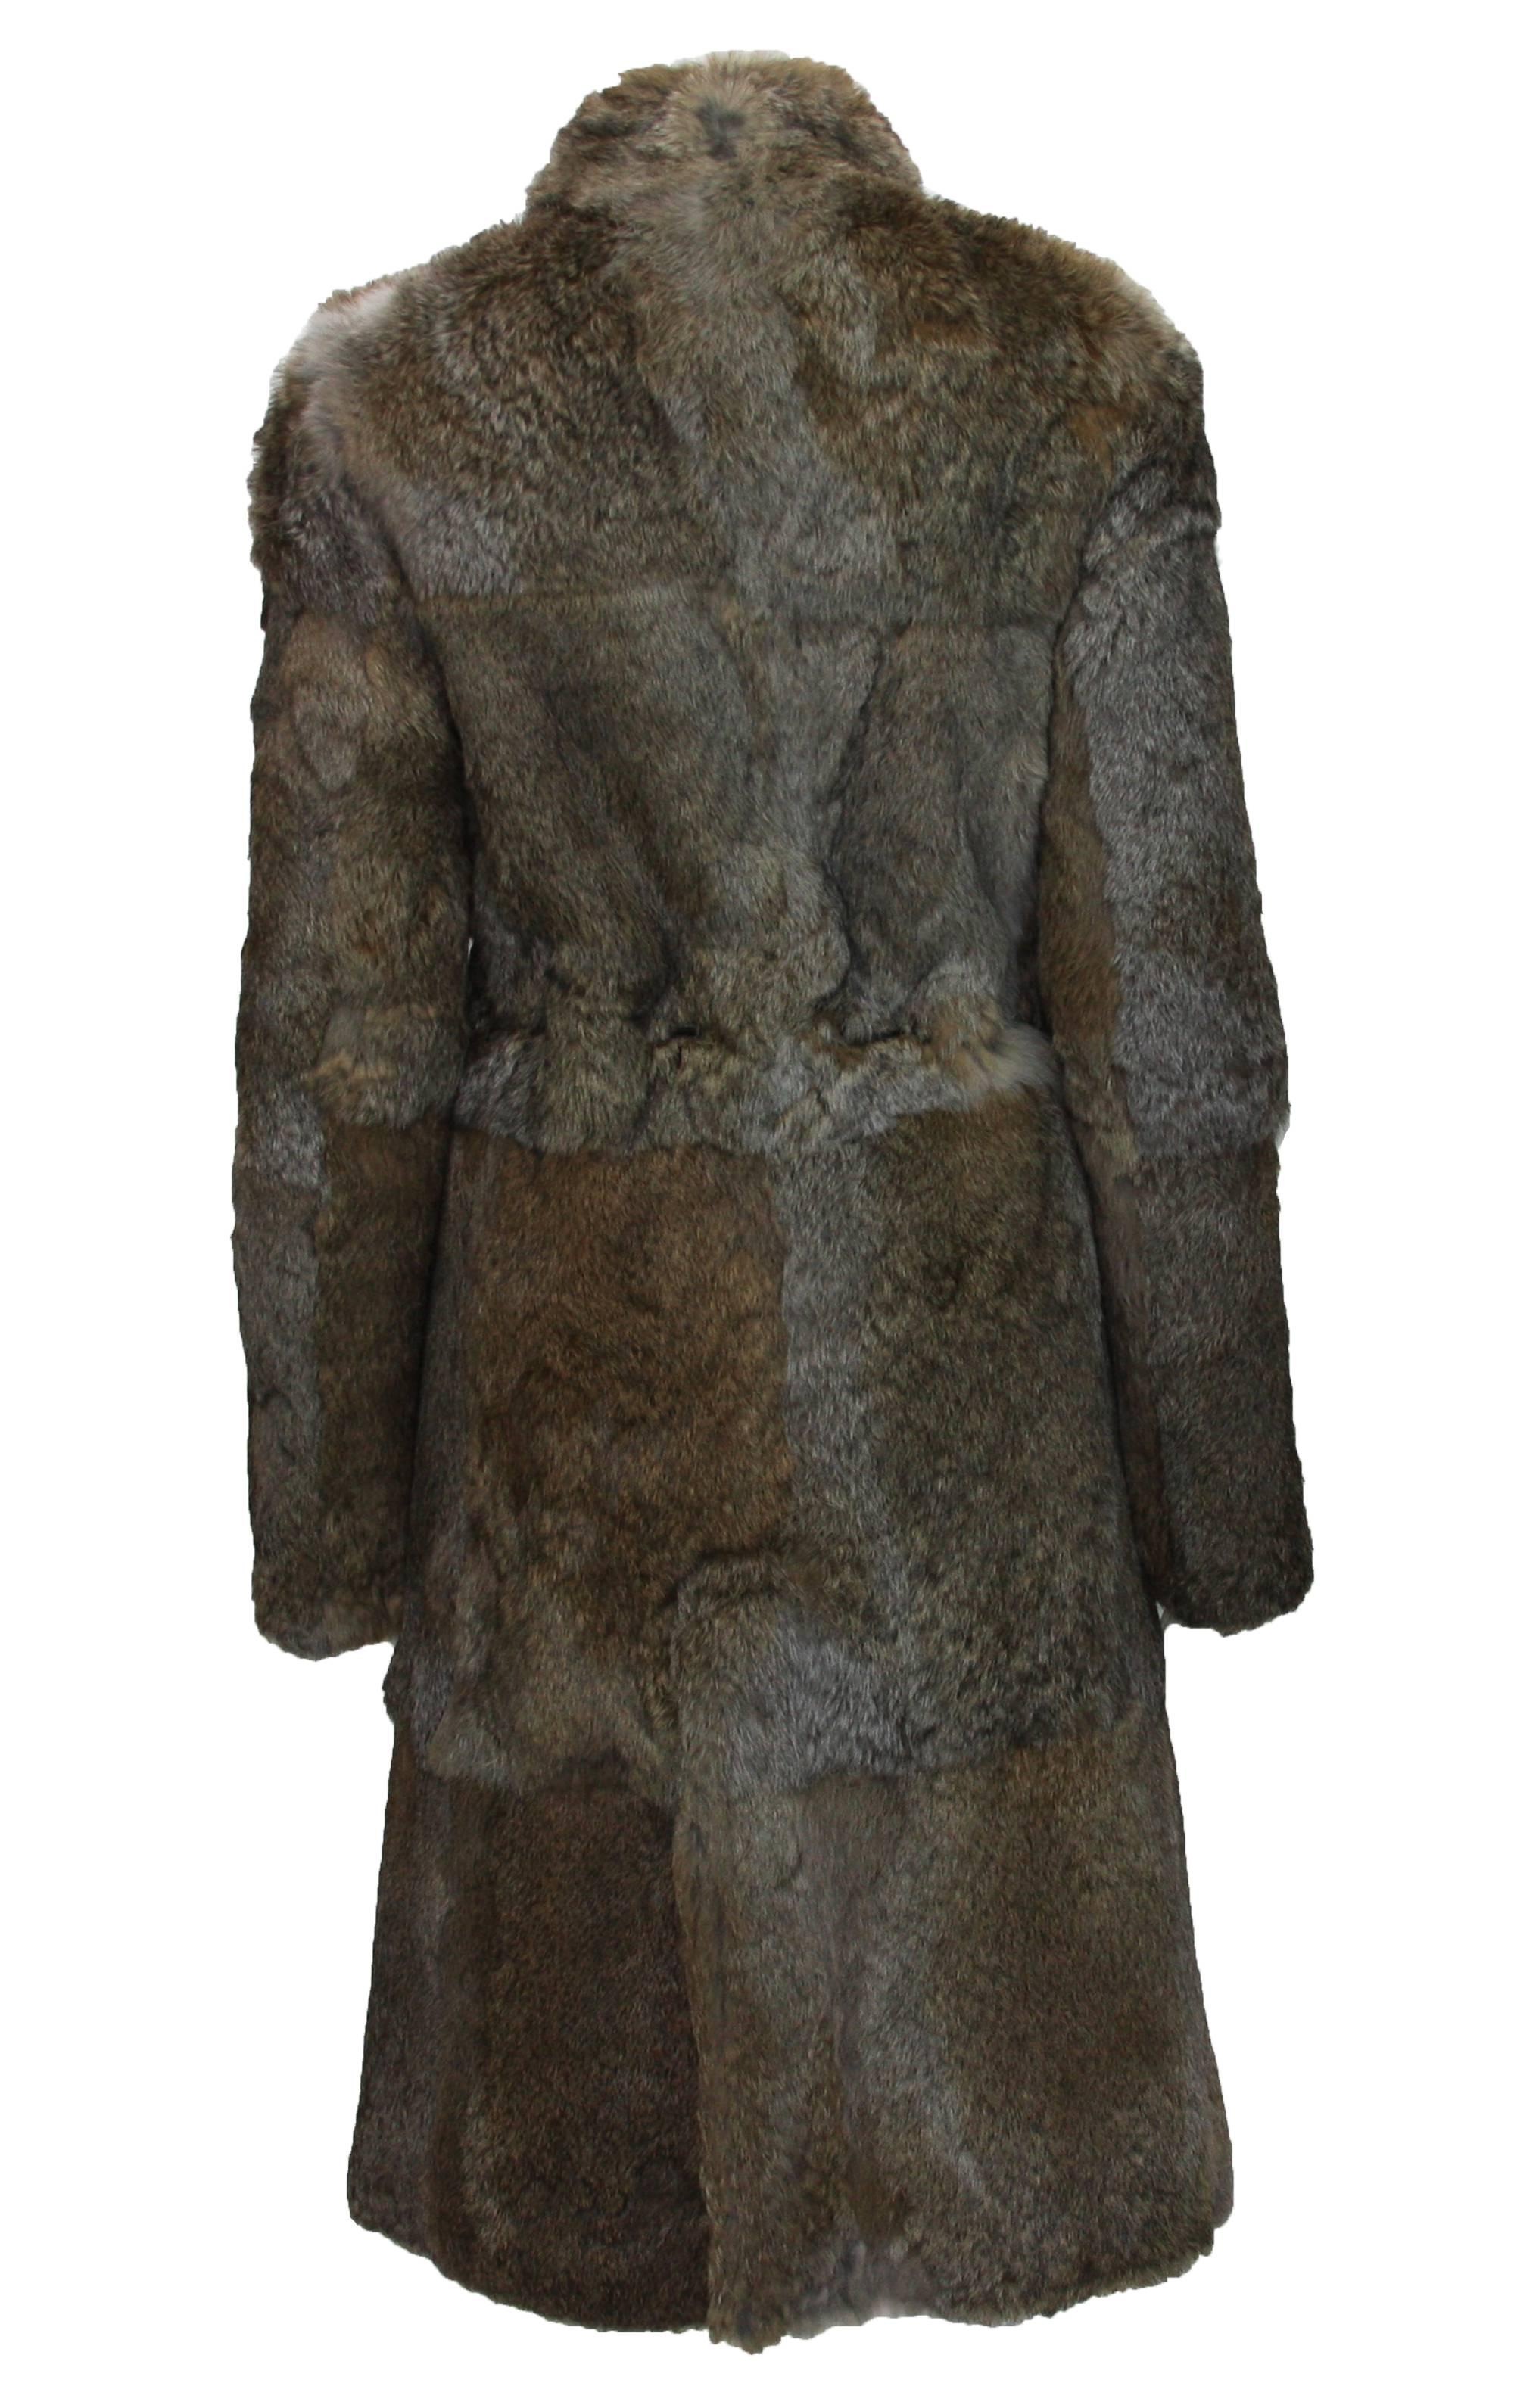 Tom Ford for Gucci Reversible Fur Beige Coat 5